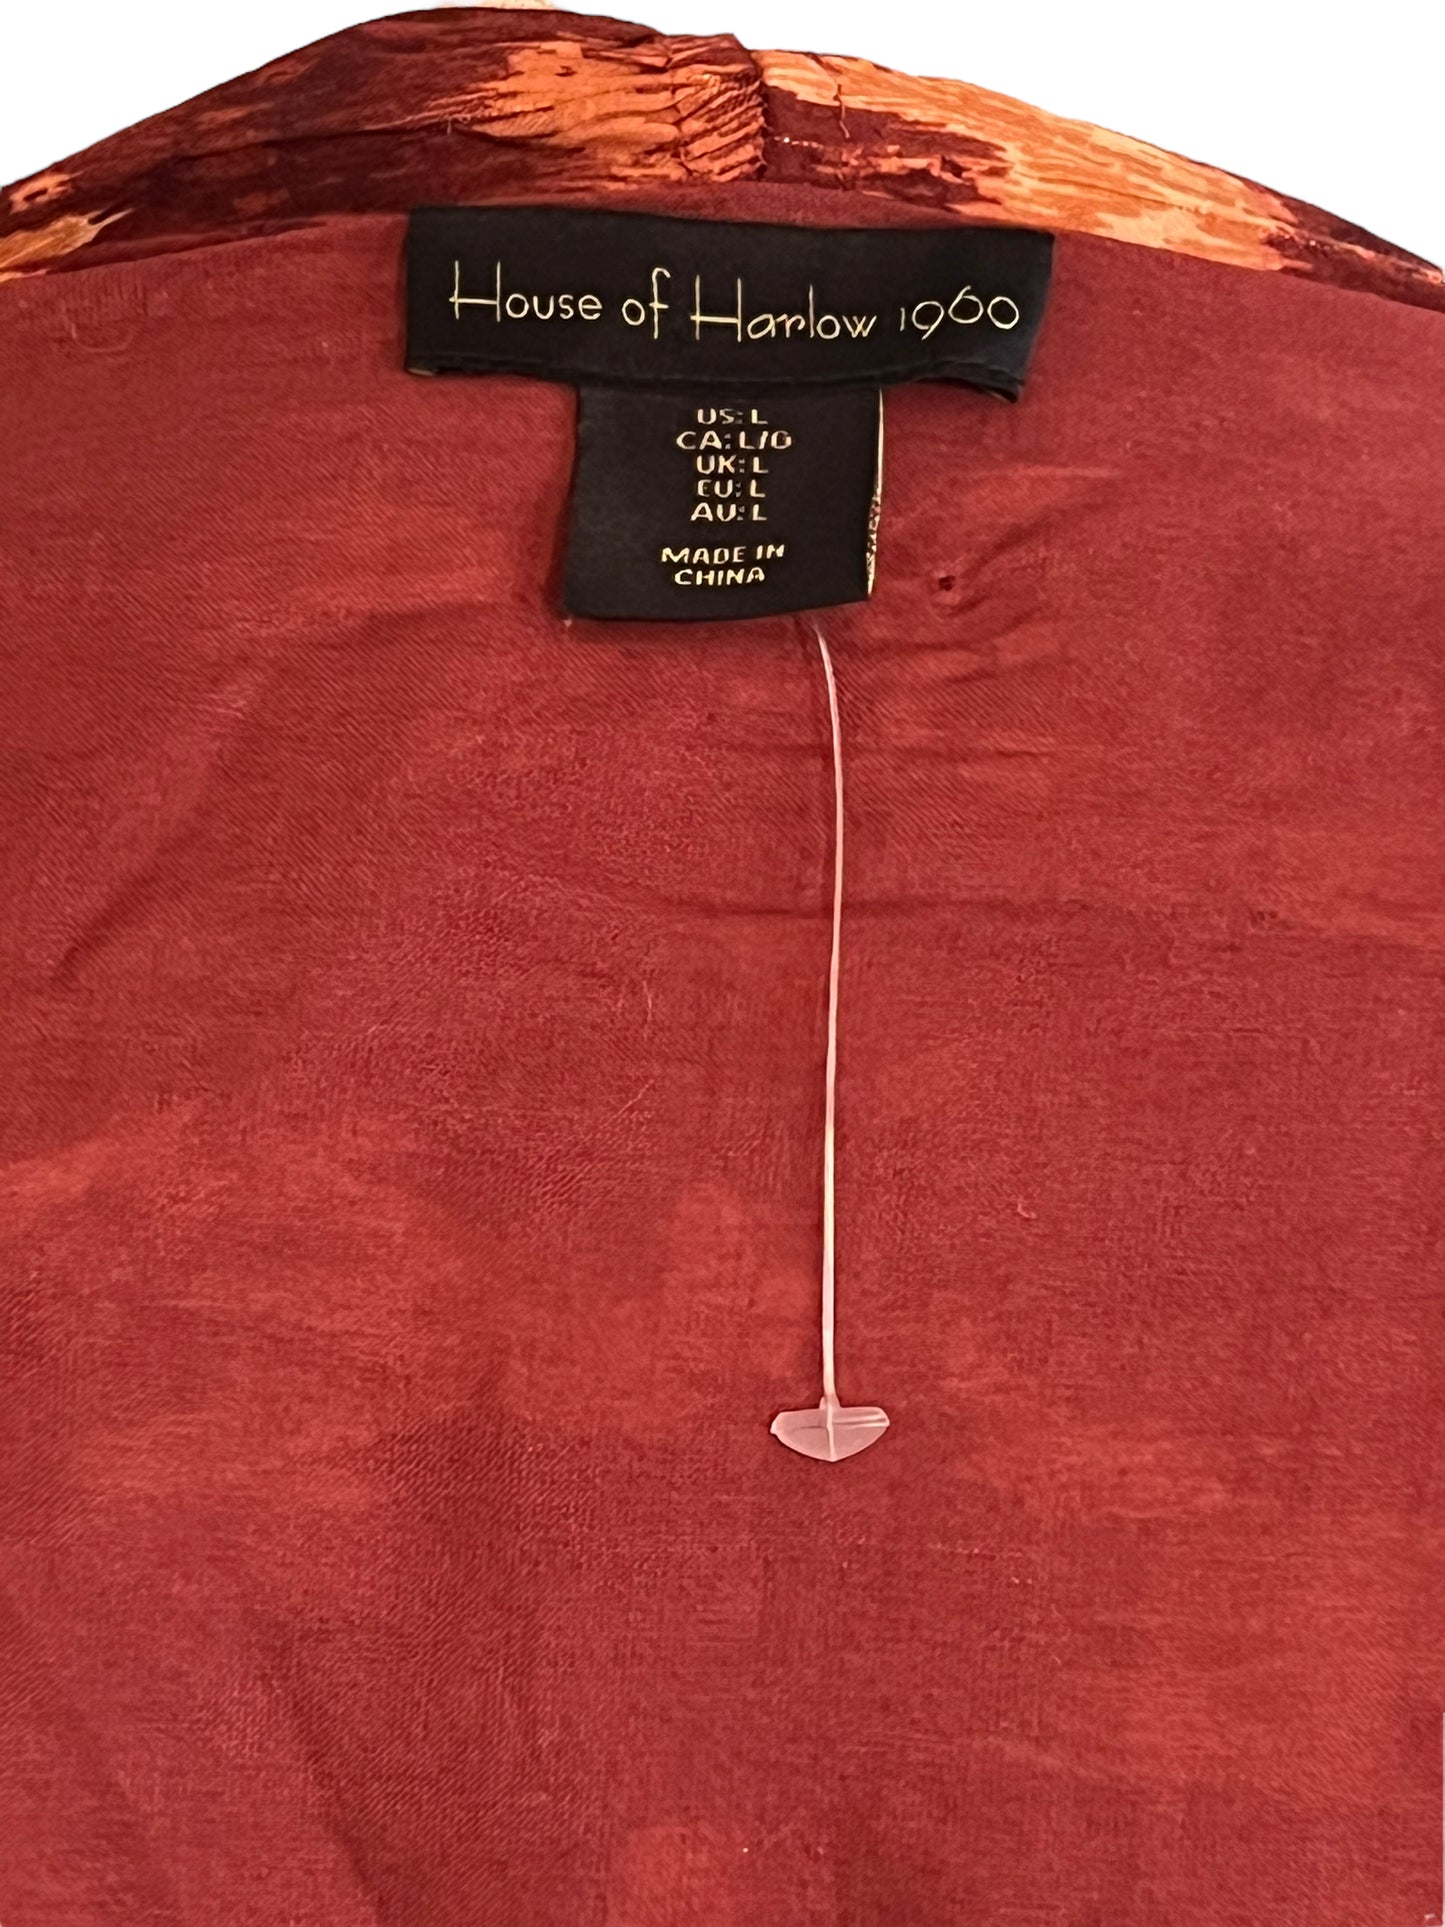 House of Harlow 1960 Size L Burgundy Ikat Print Dress